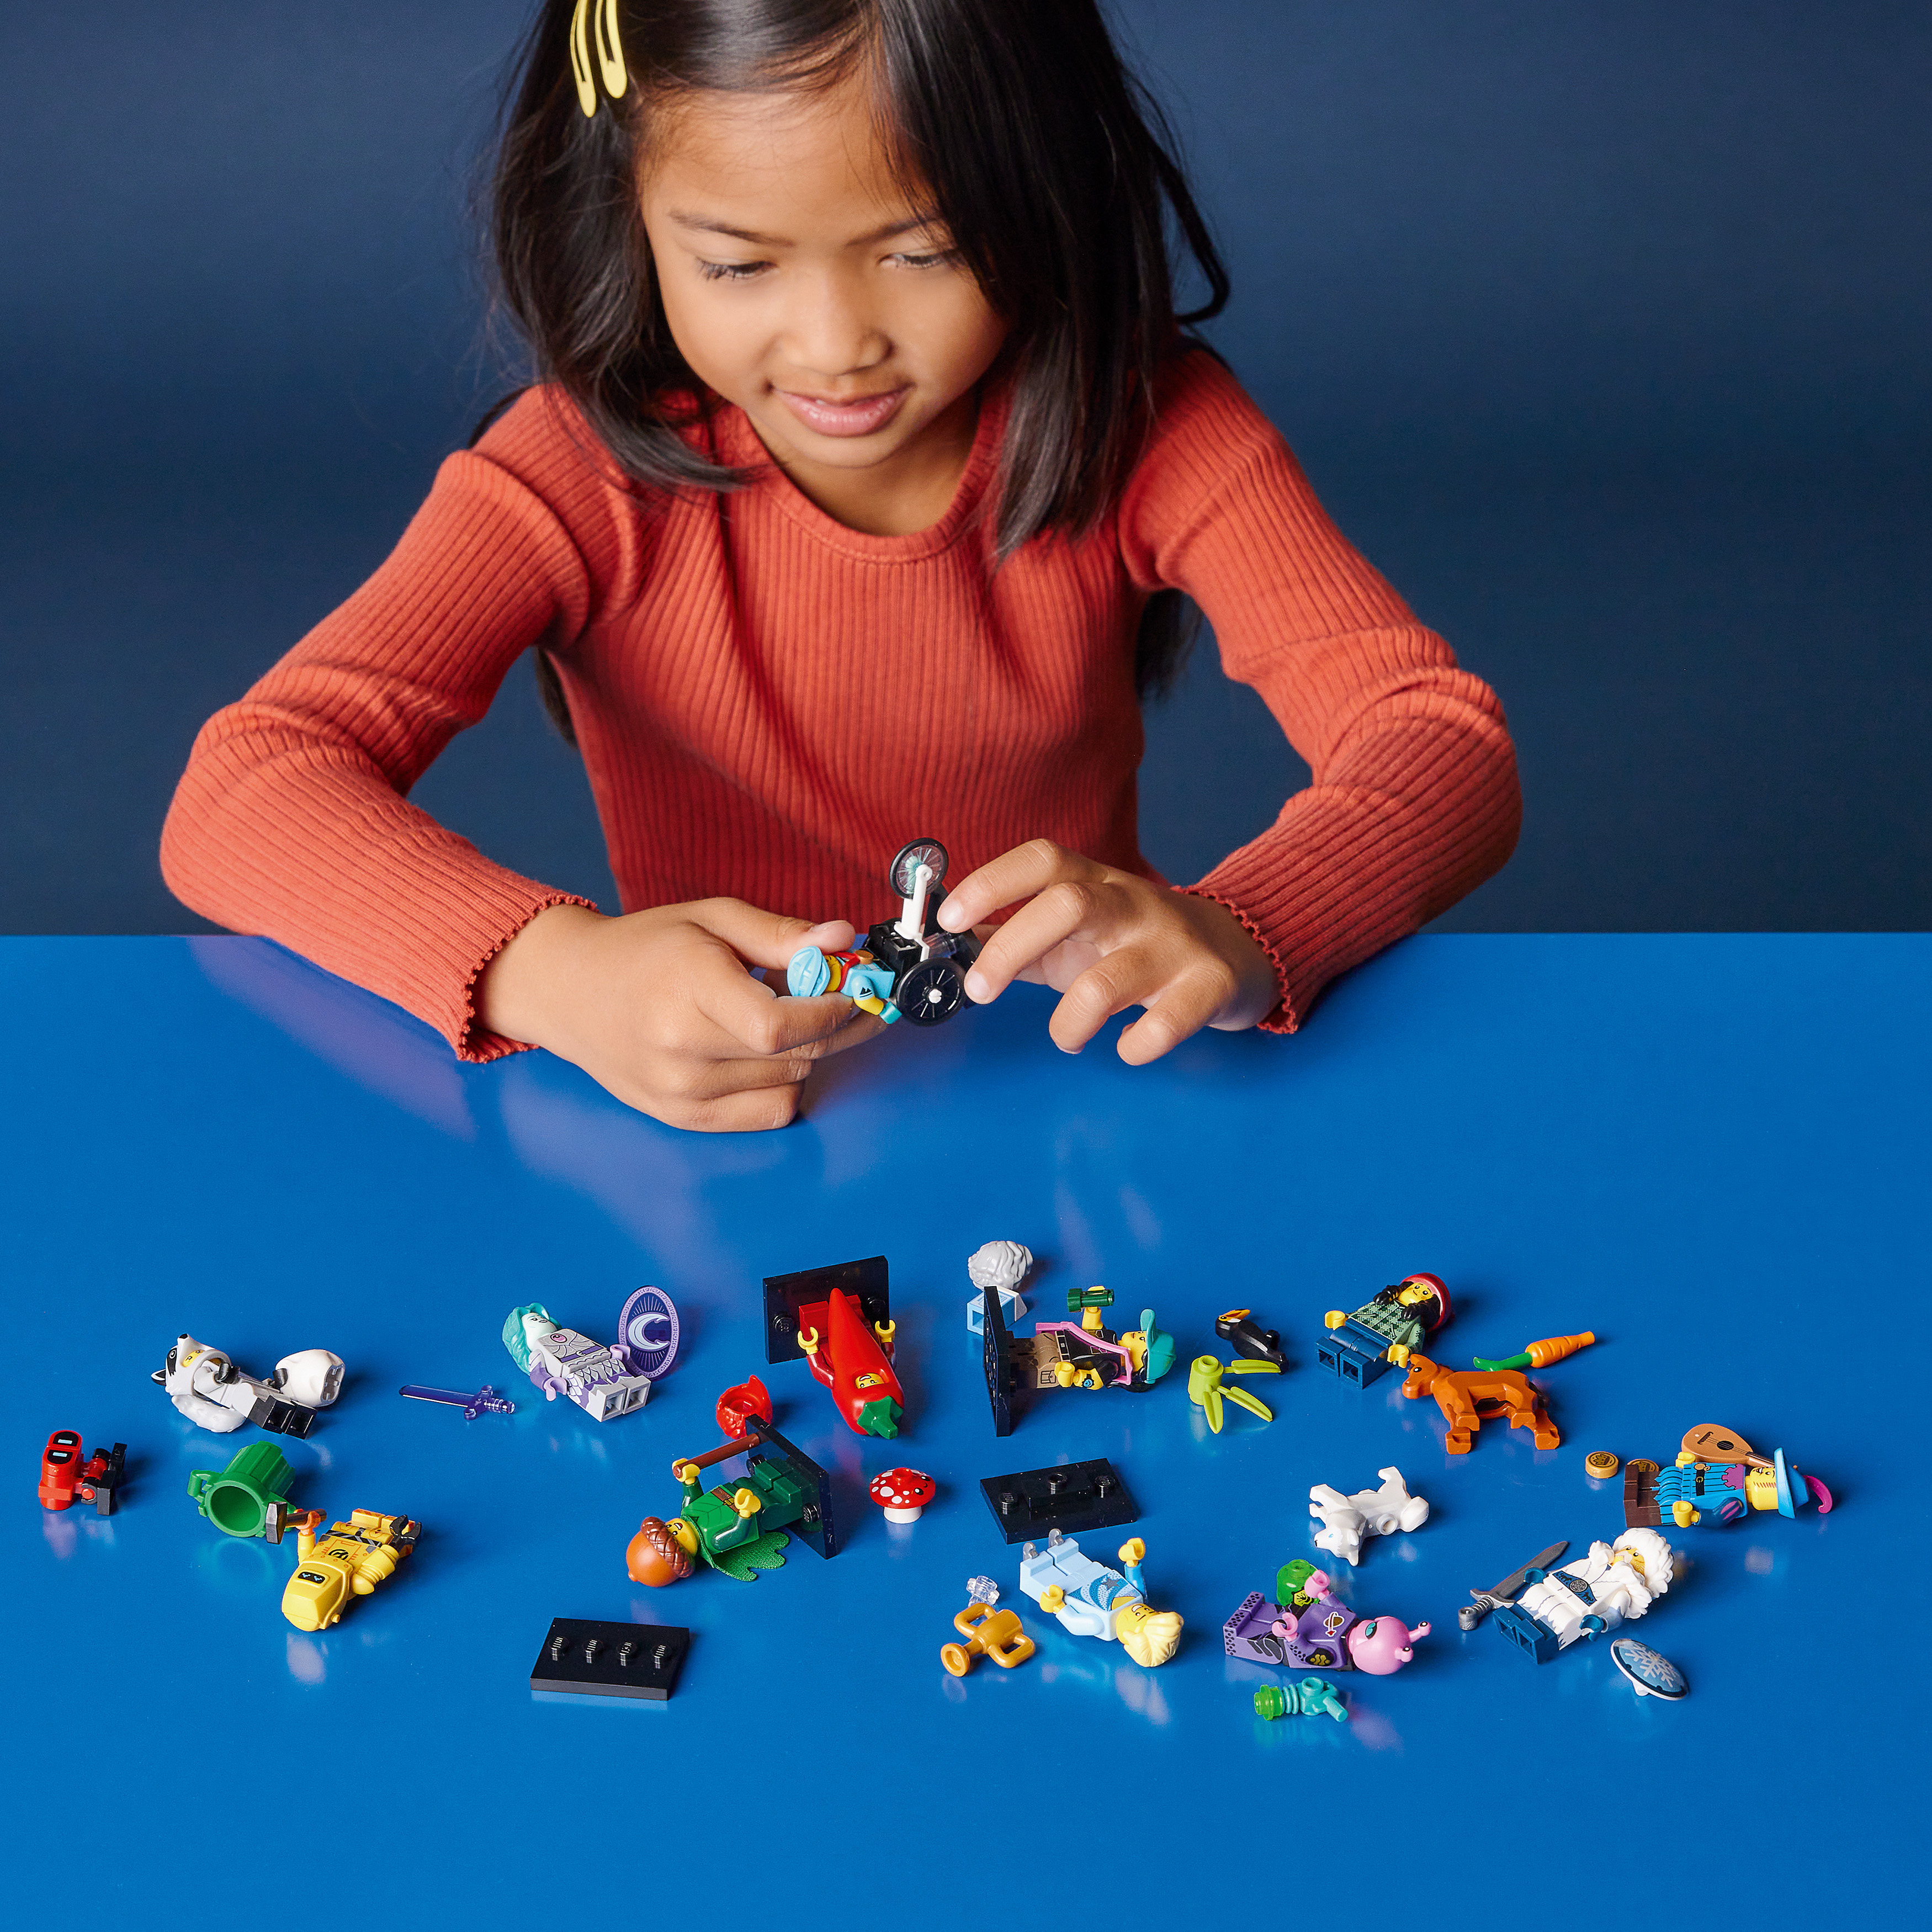 LEGO 71032 Minifigures Serie 22 Komplettsatz mit allen 12 Figuren CMF Komplett